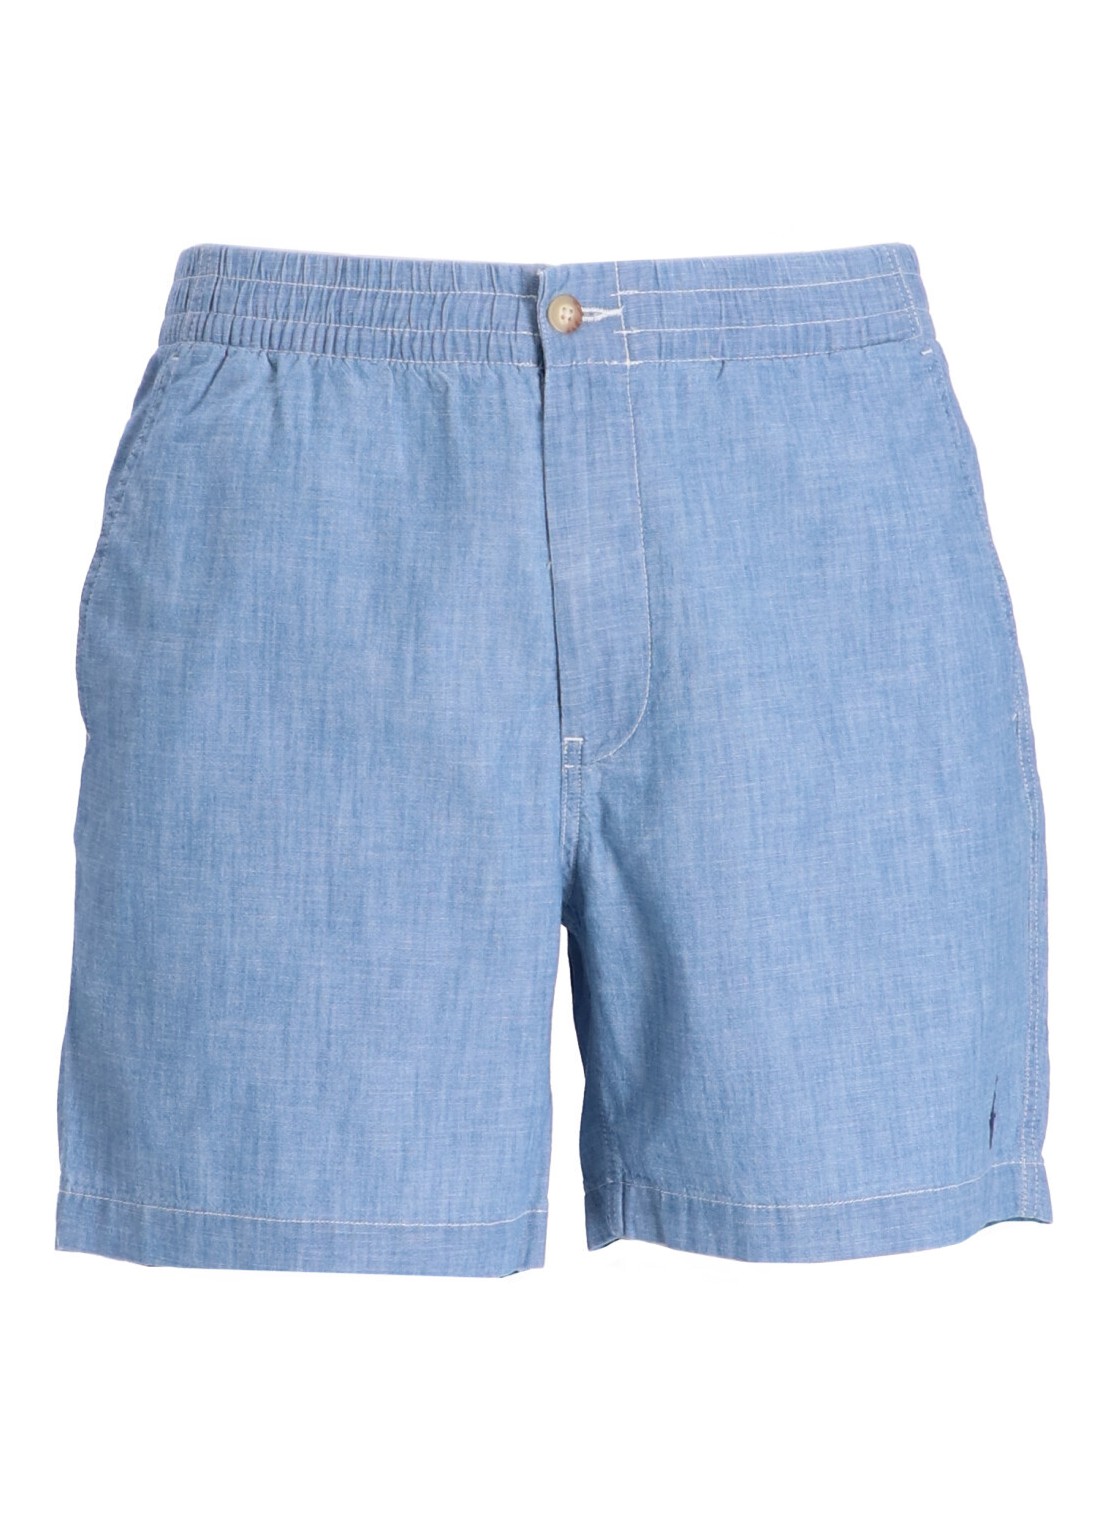 Pantalon corto polo ralph lauren short pant mancfprepsters-flat front - 710862776001 chambray talla 